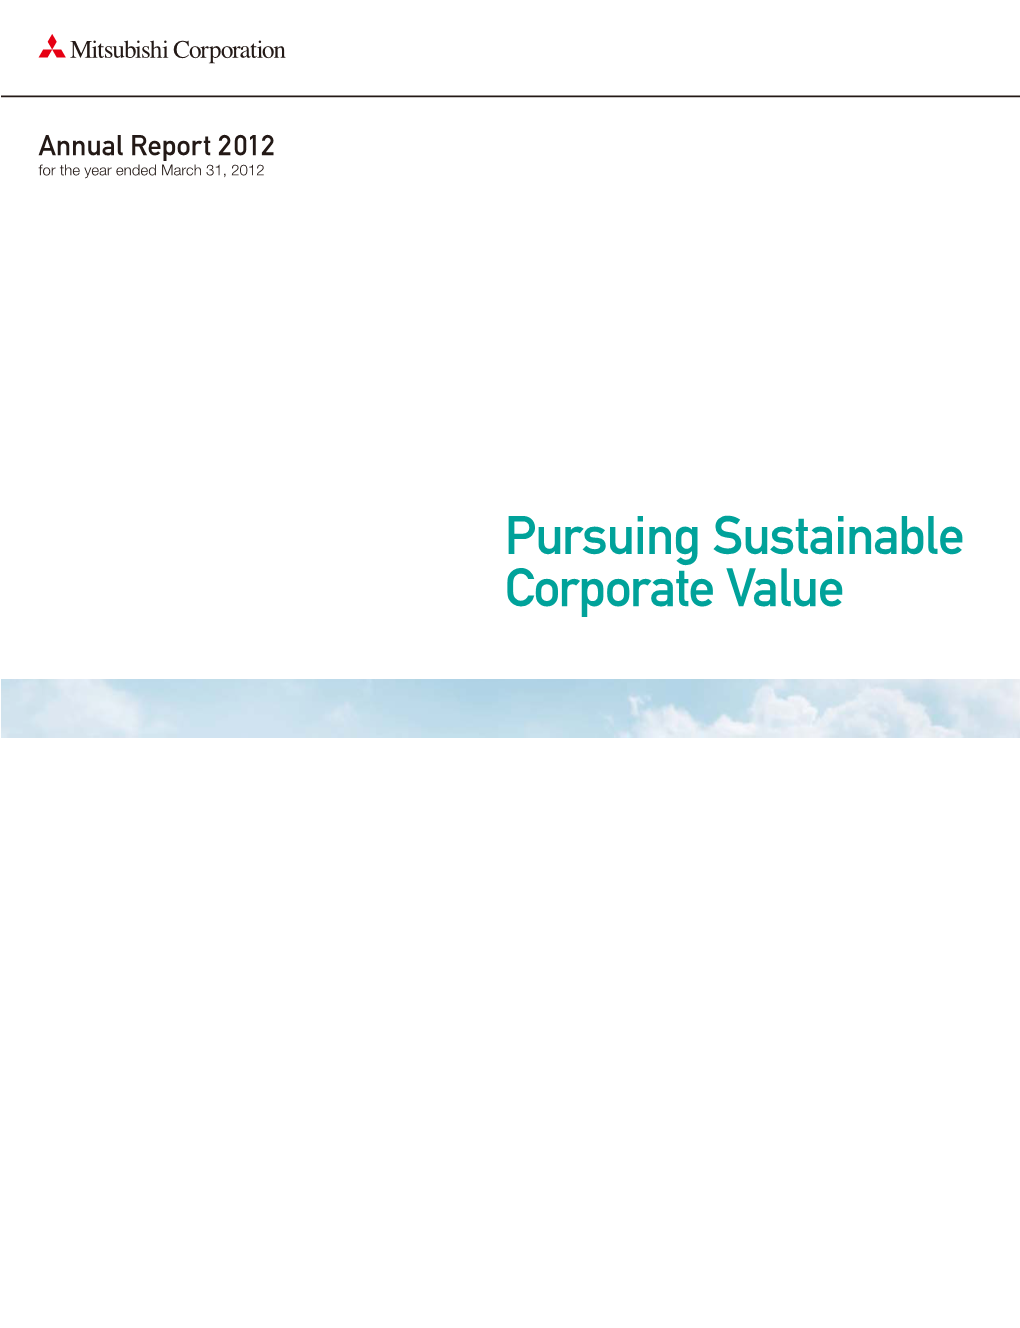 Pursuing Sustainable Corporate Value Corporate Profile